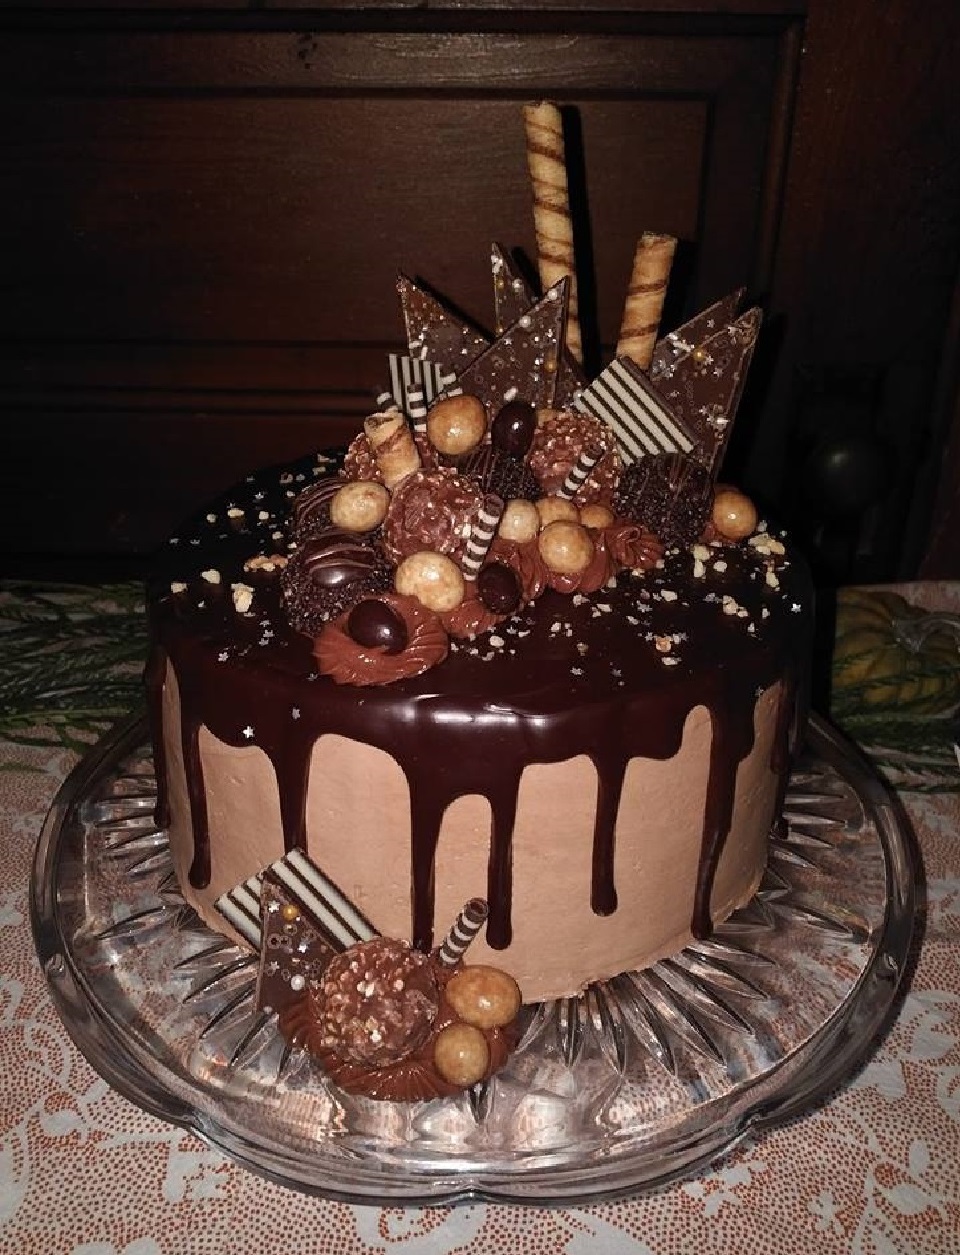 Nutella® Chocolate Cake